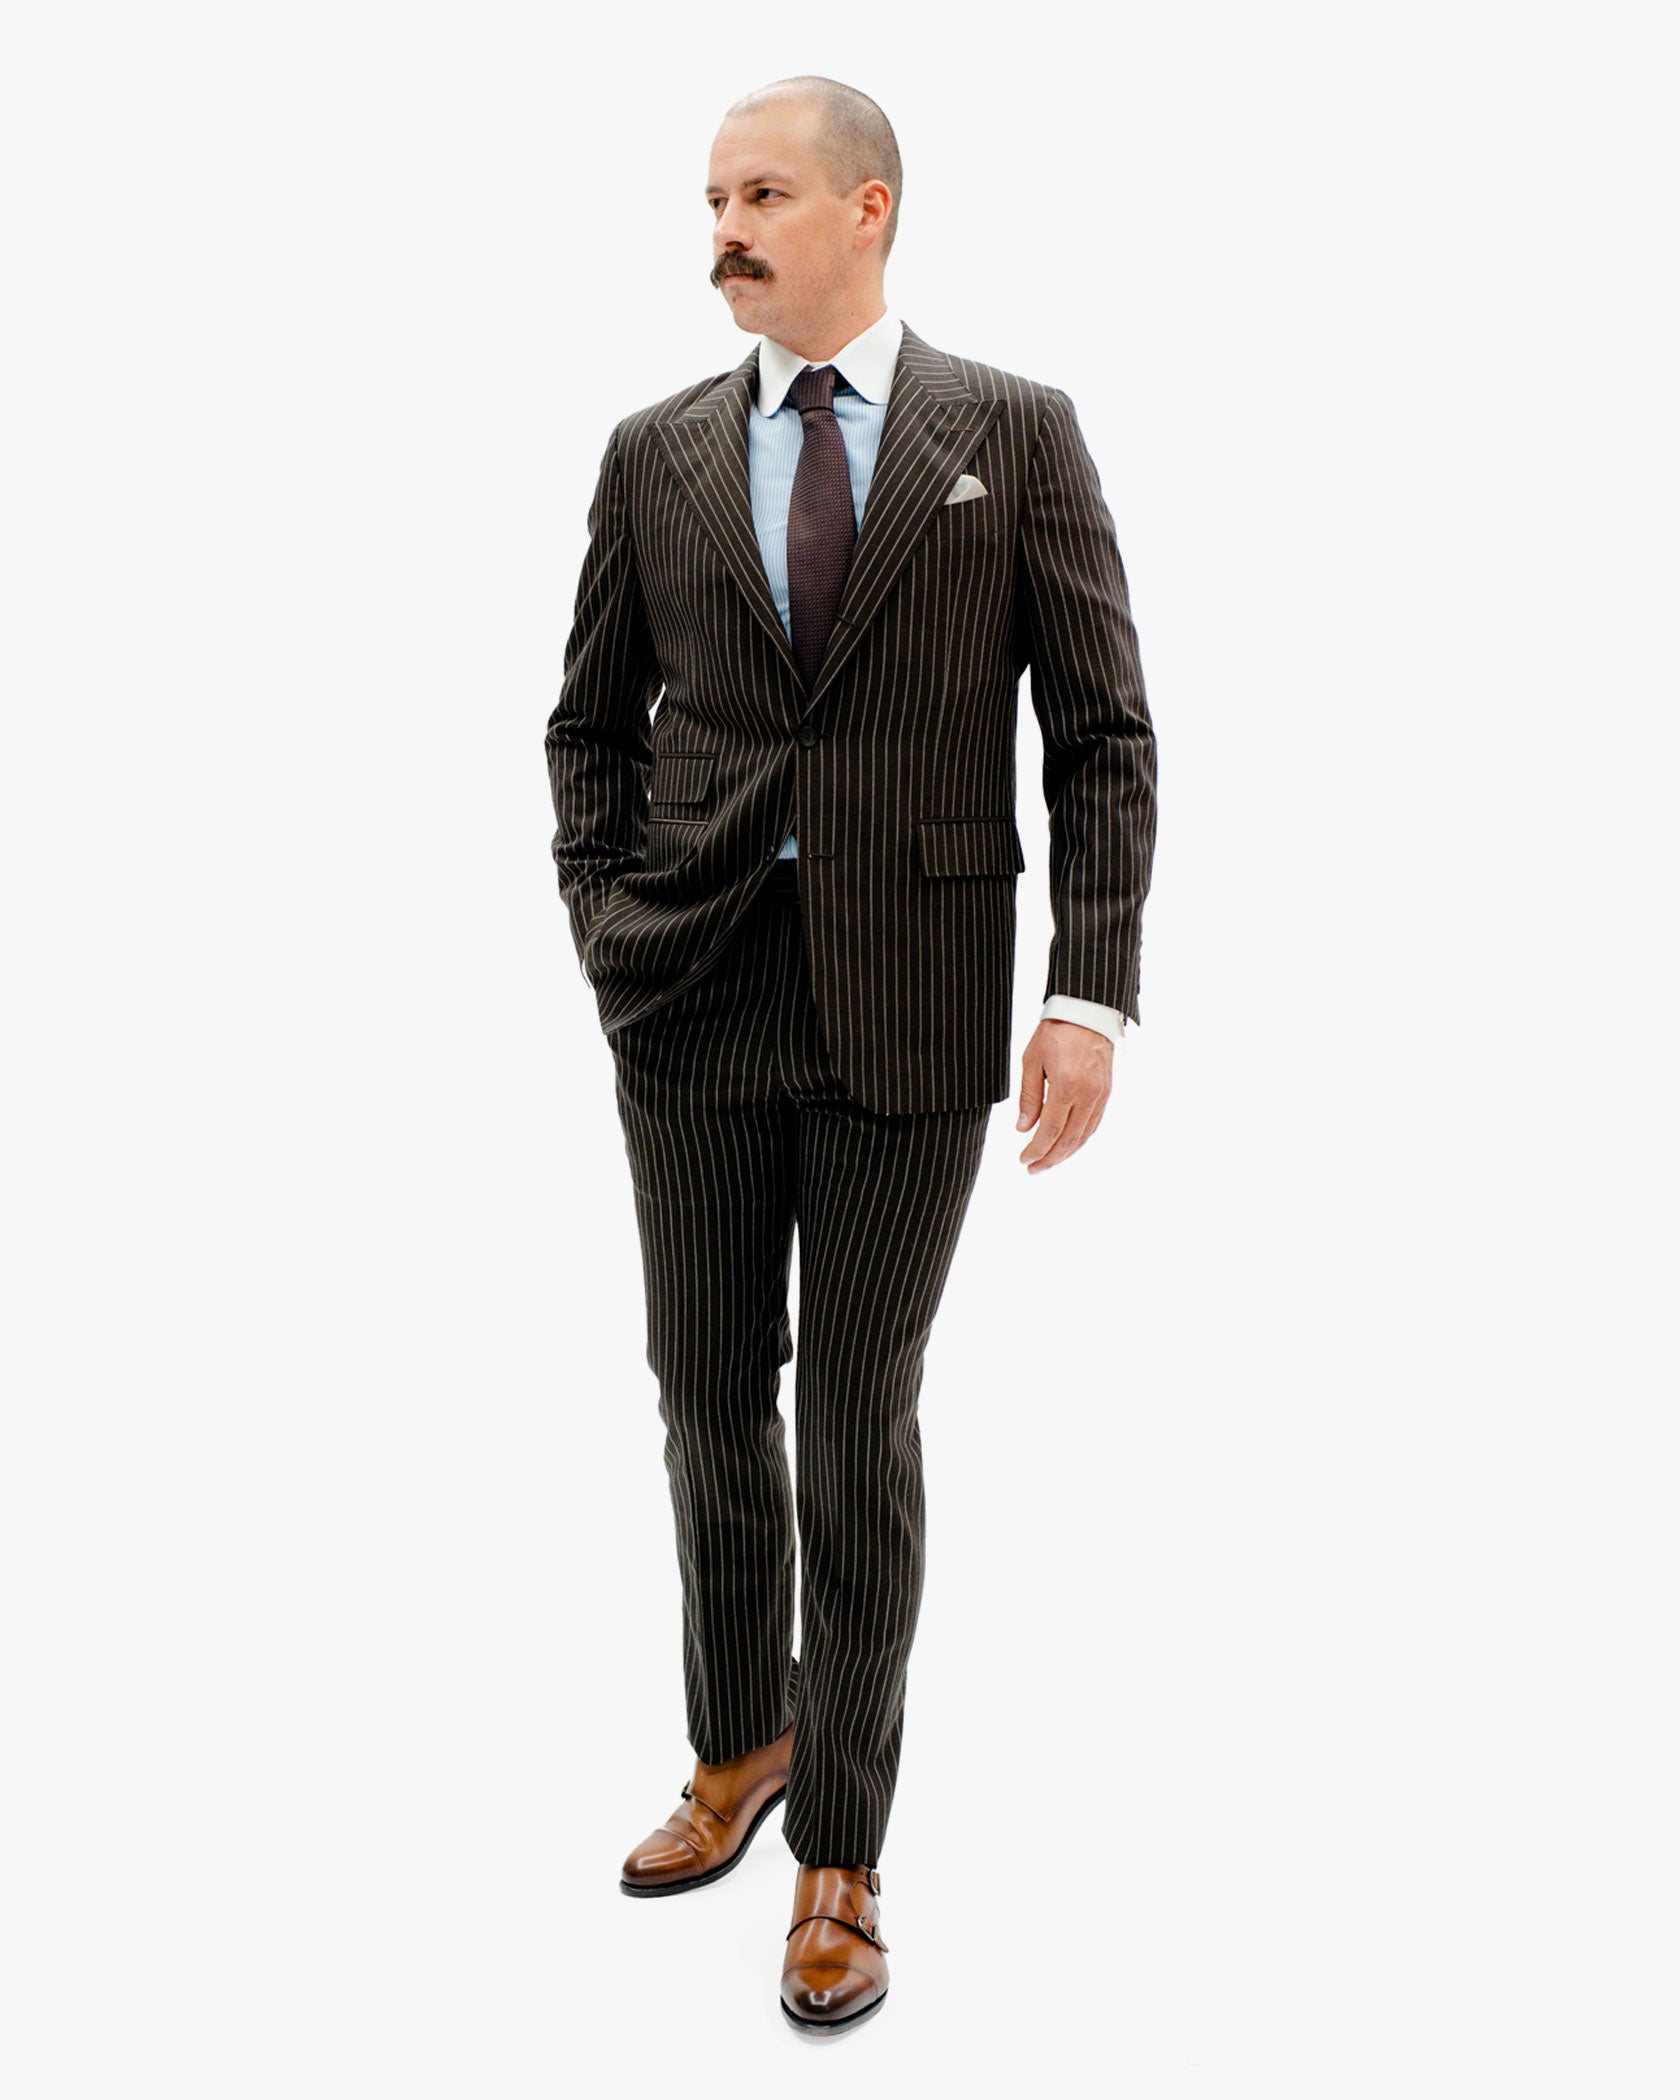 Bryant/Draper - The Hudson Suit